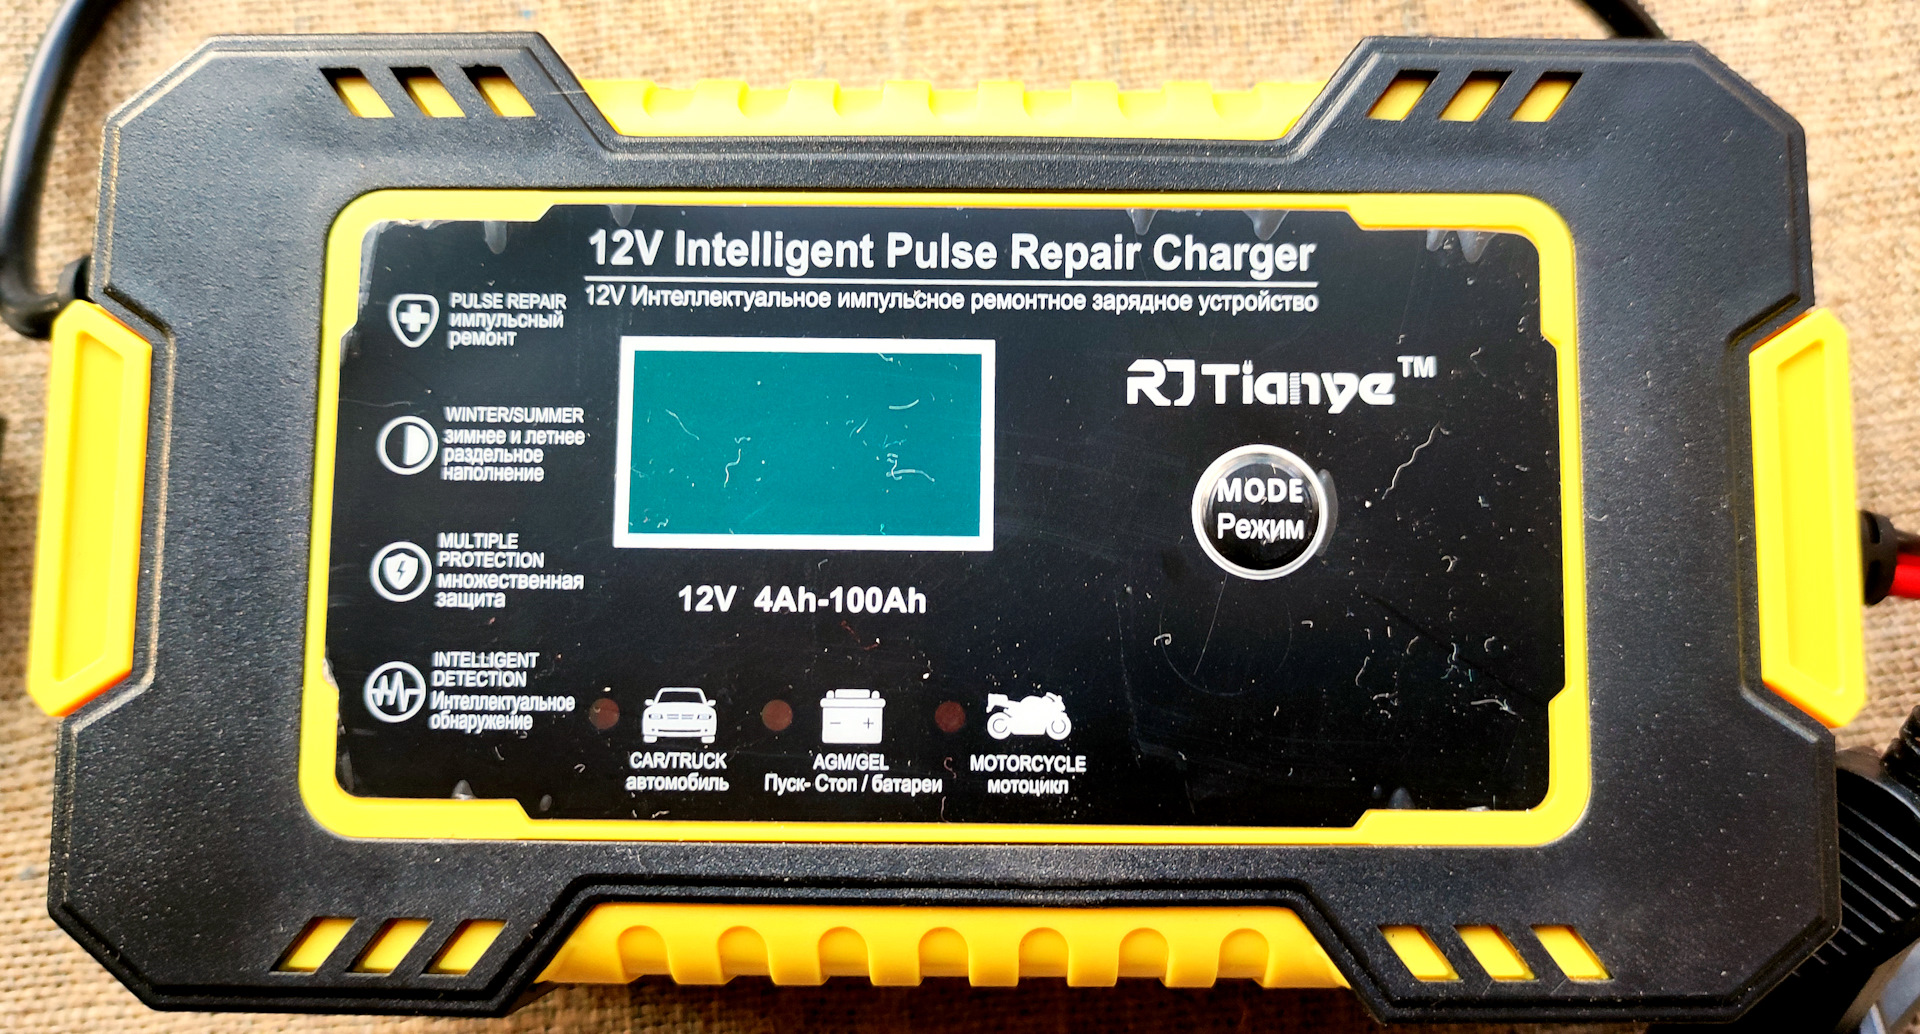 12v intelligent инструкция. 12v Intelligent Pulse Repair Charger. RJ Tianye зарядное устройство для автомобильного аккумулятора. 12 Intelligent Pulse Repair Charger. RJ Tianye 12v Intelligent Pulse Repair Charger.